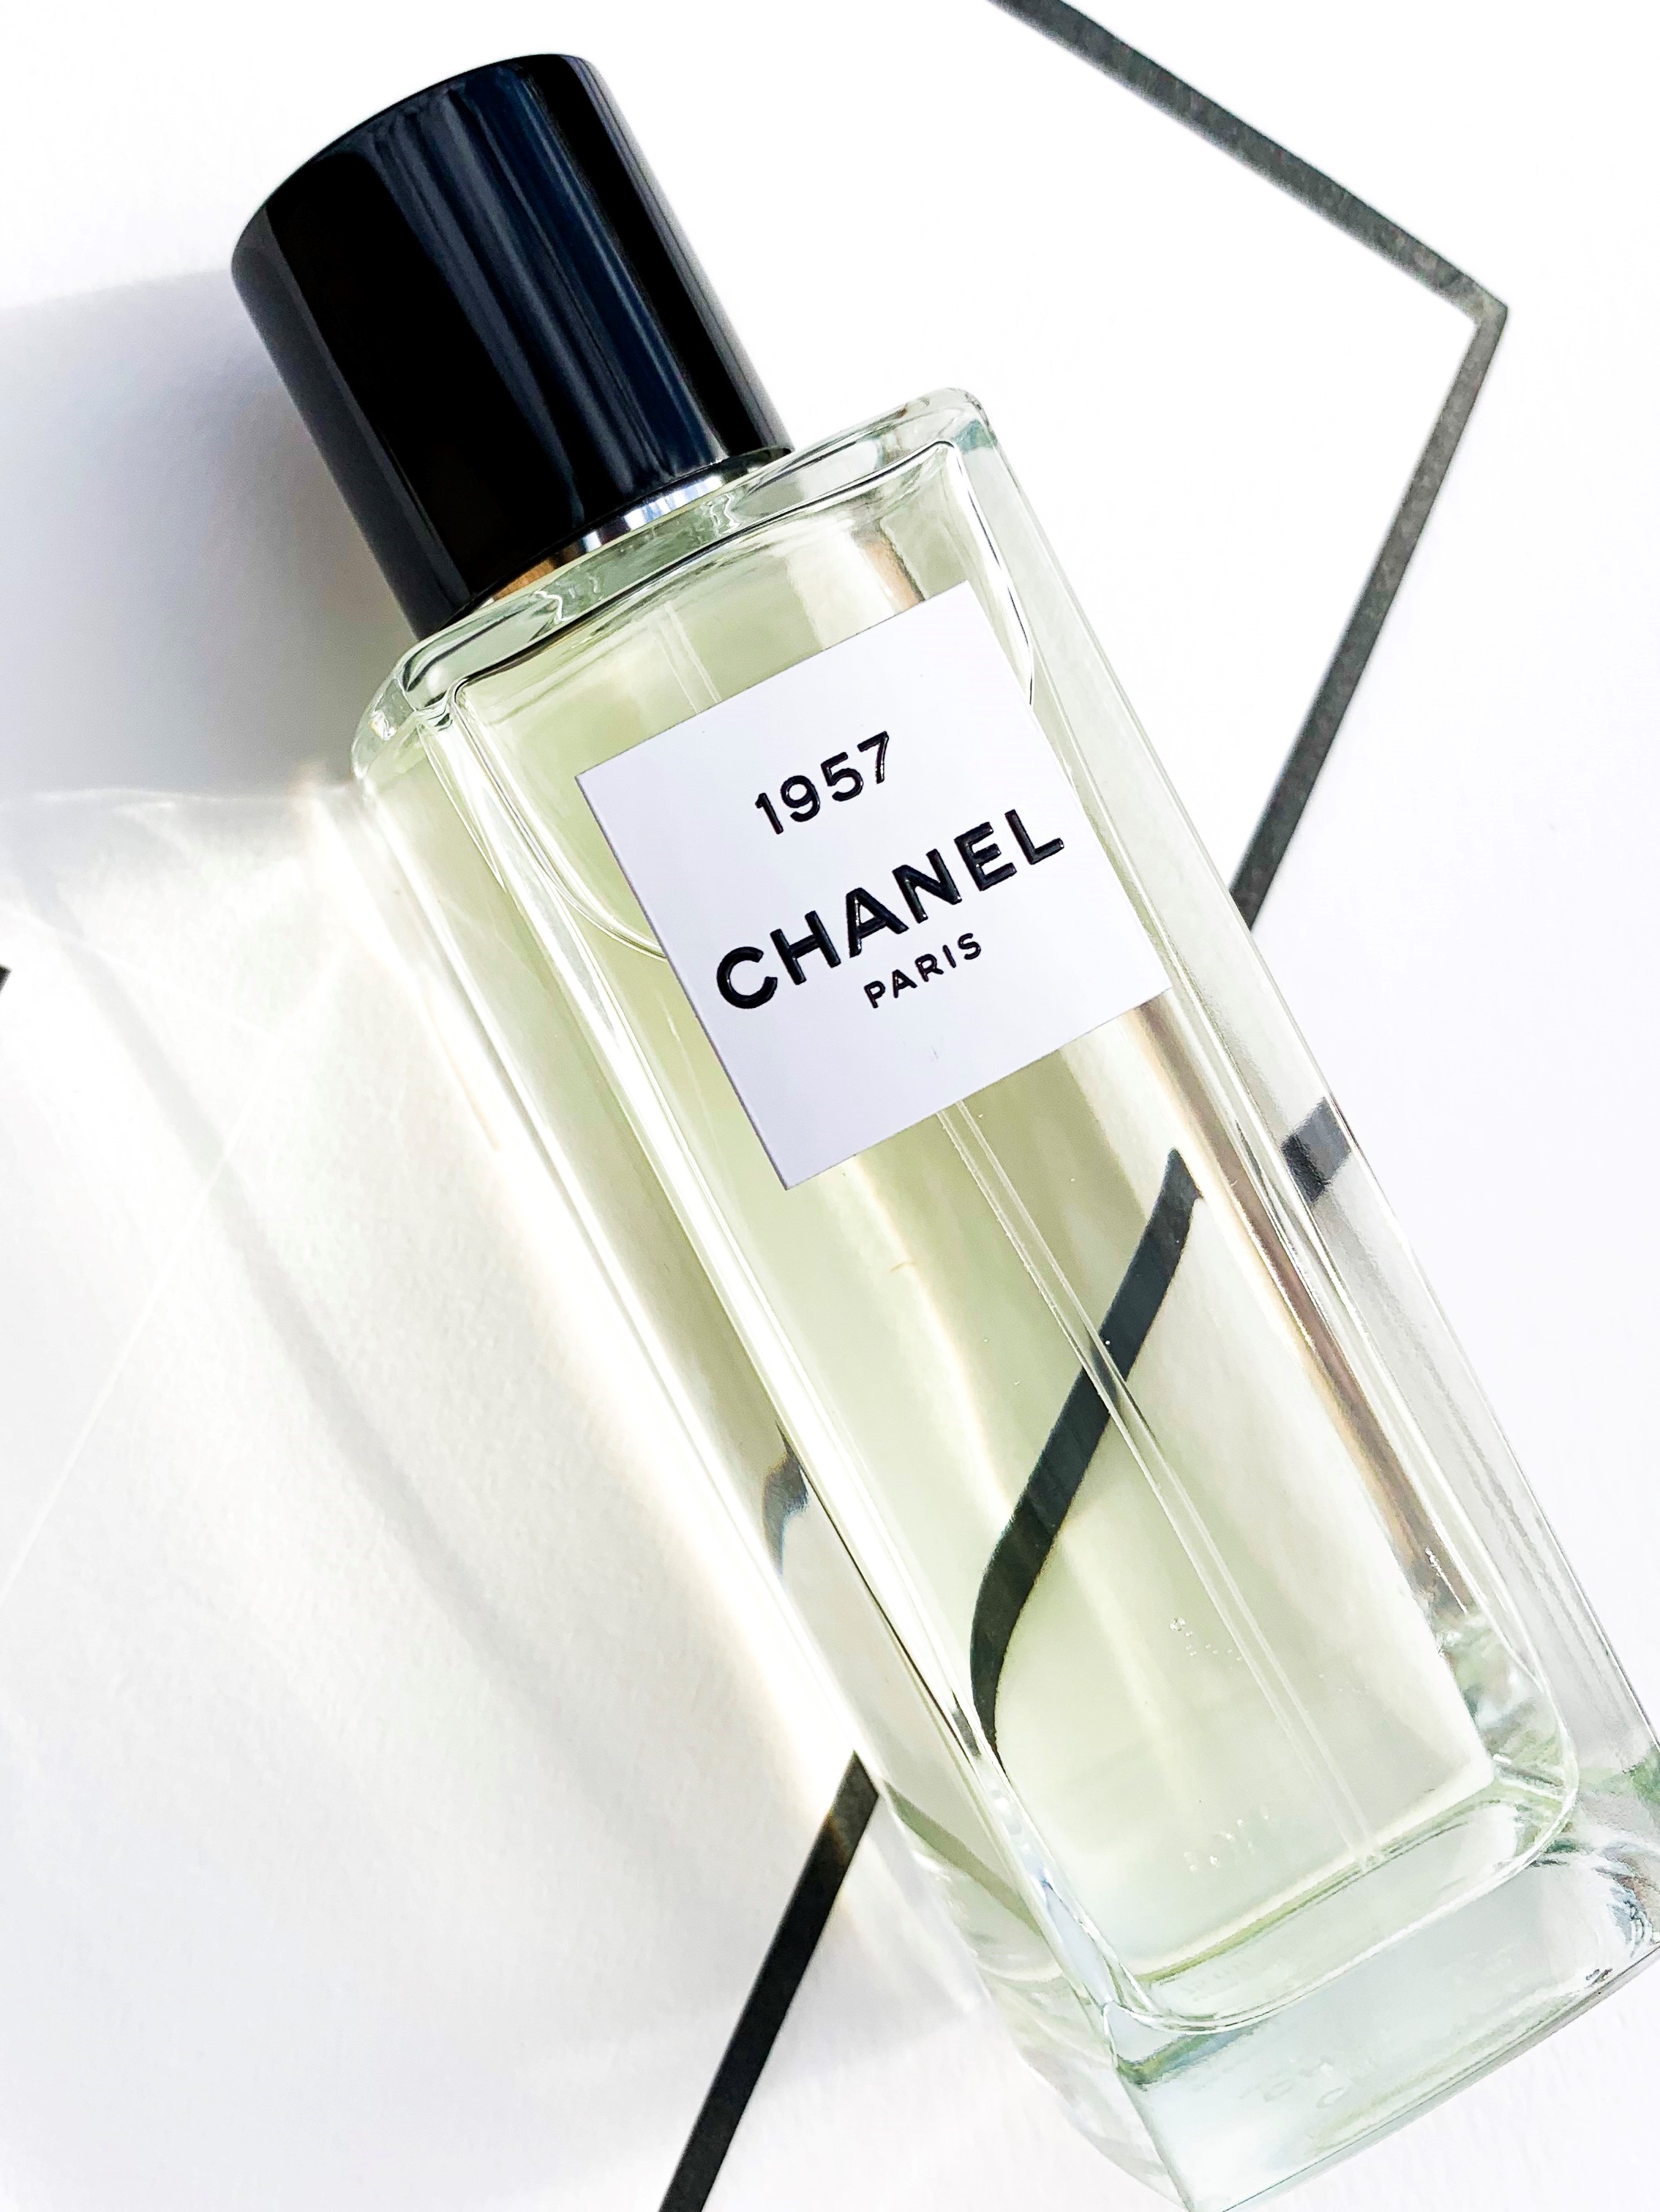 chanel 1957 perfume sample